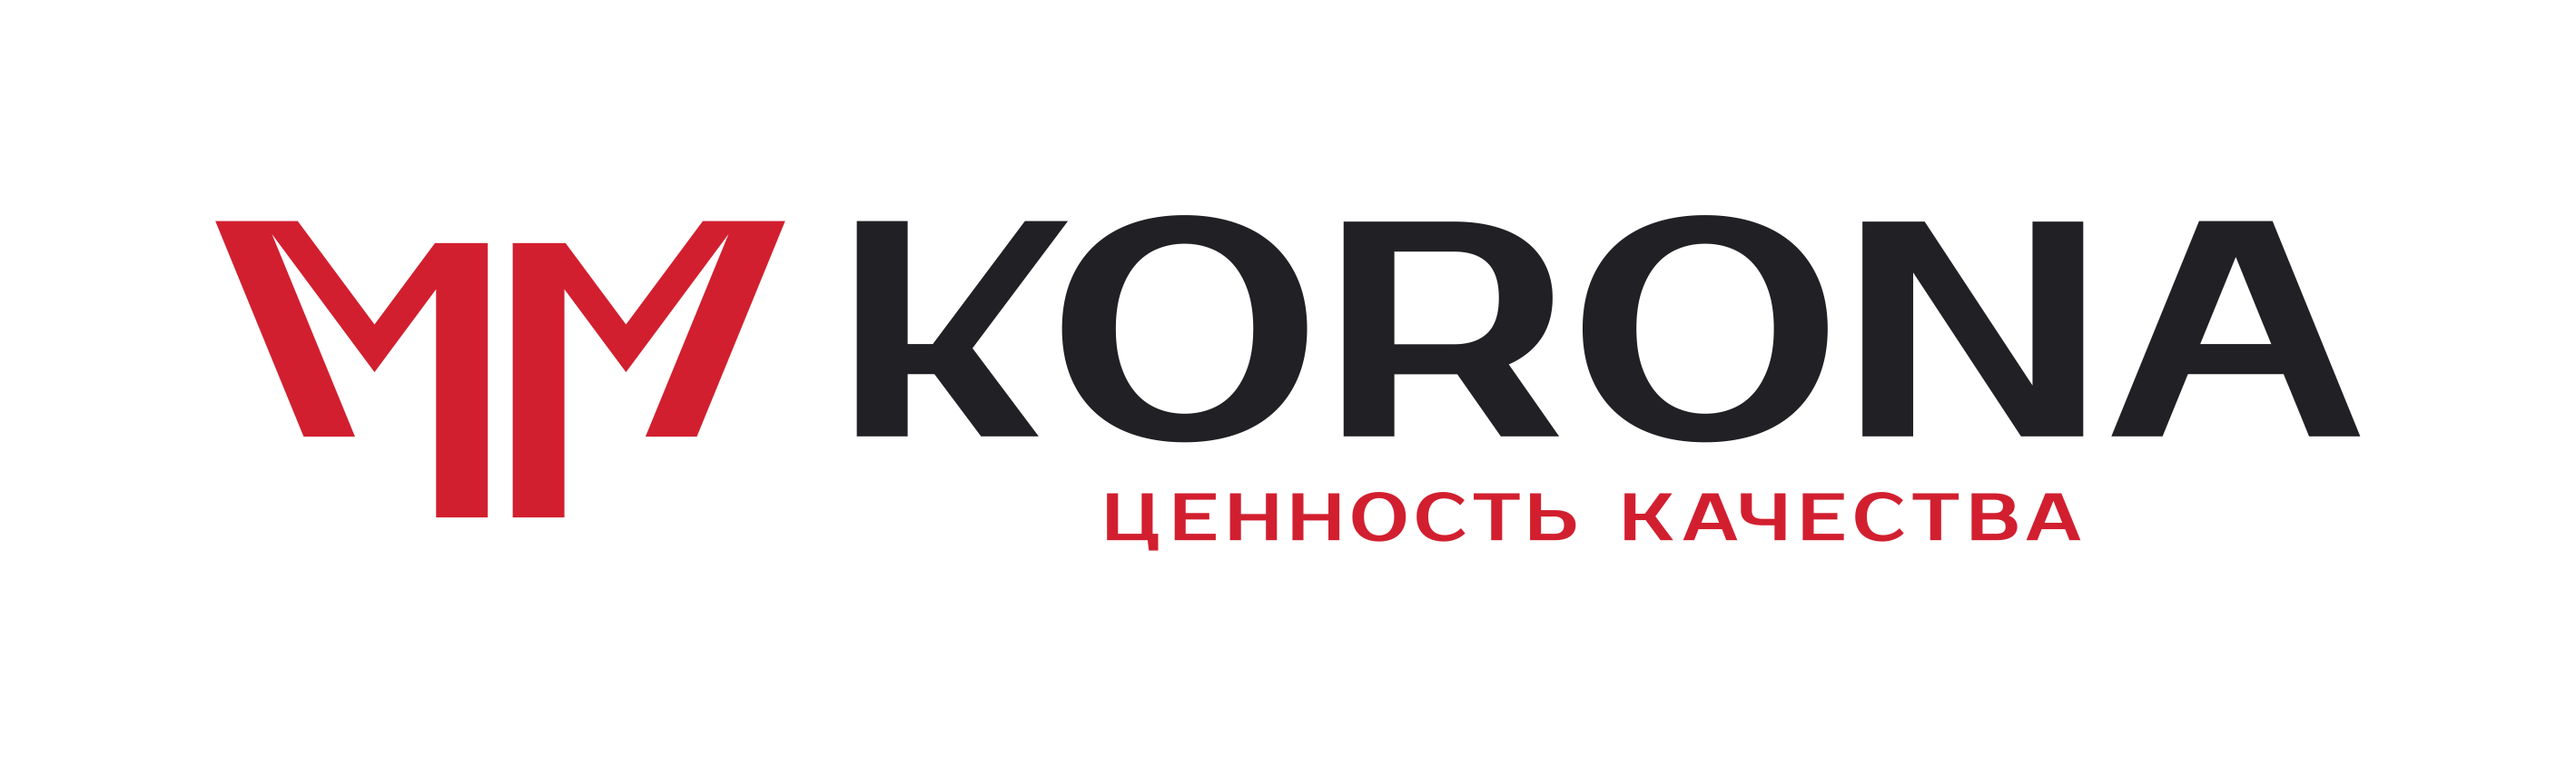 KORONA_logo_g_description_red black